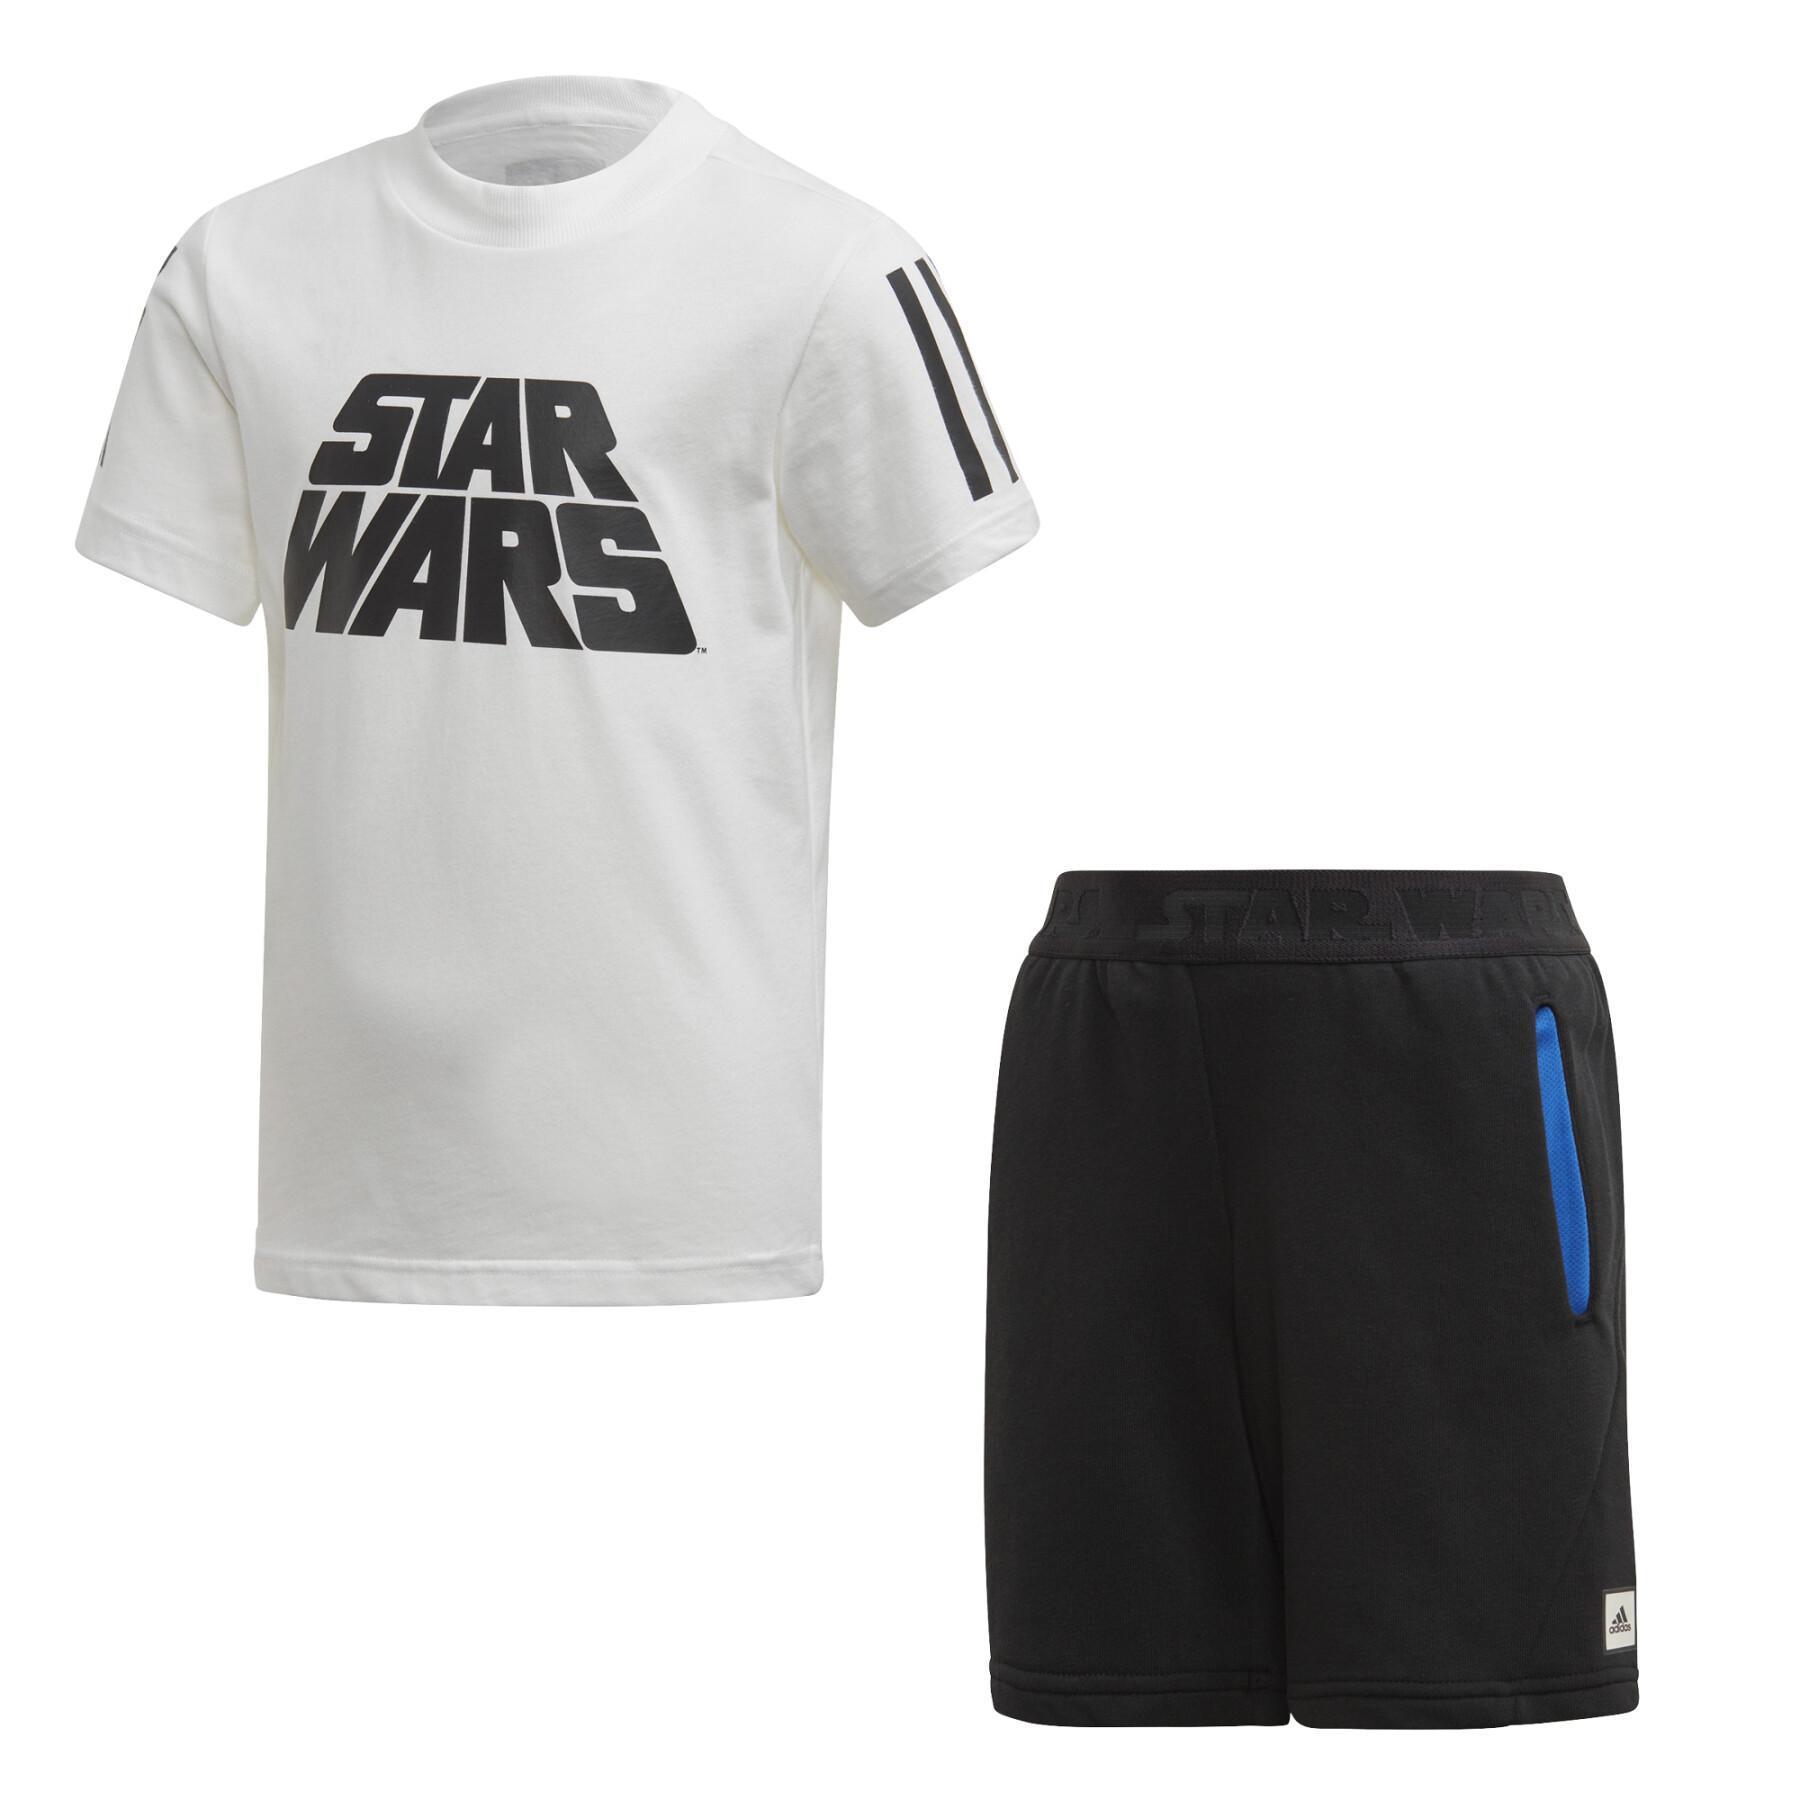 Minikit adidas Star Wars Summer